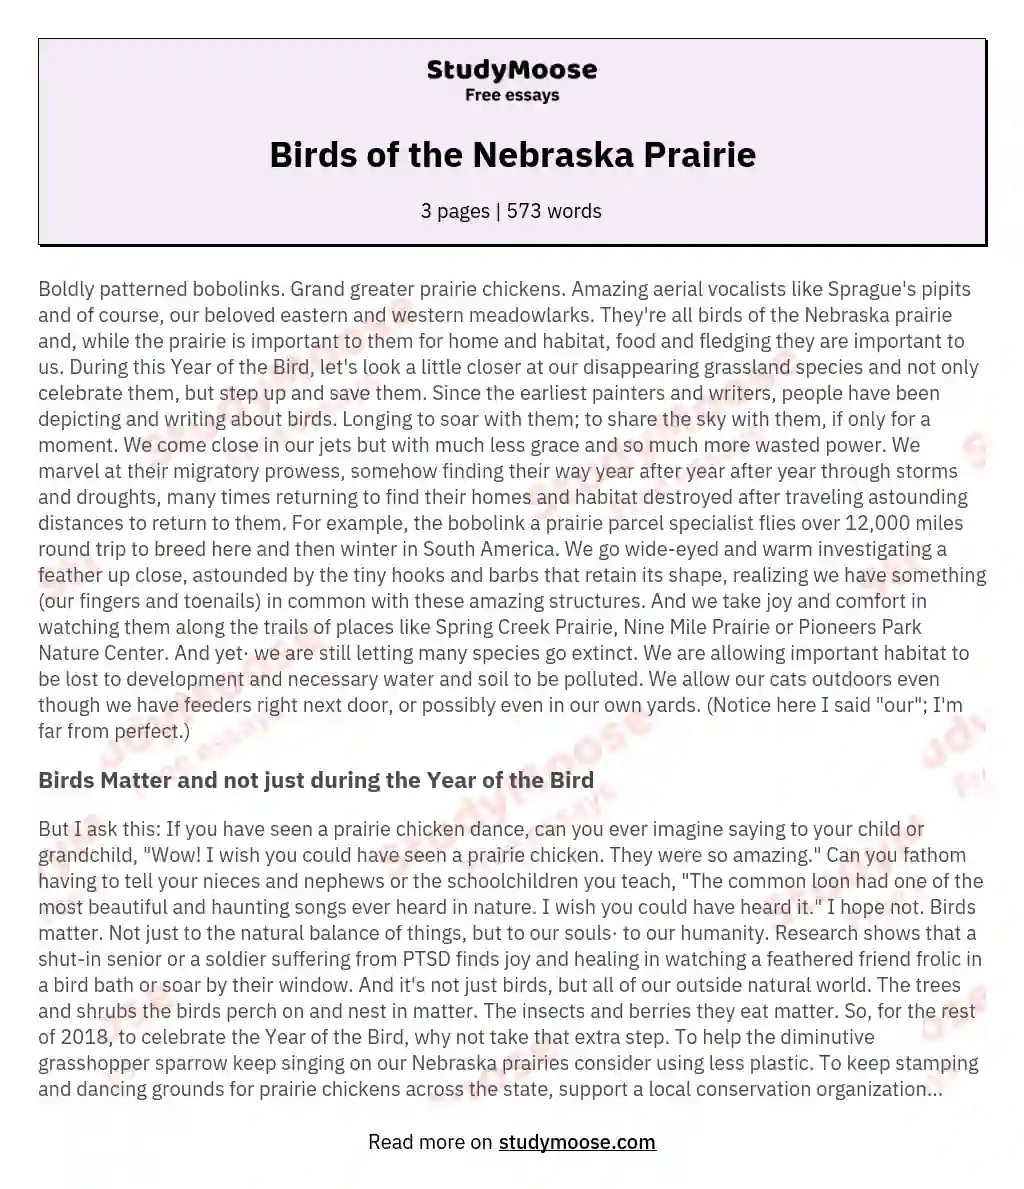 Birds of the Nebraska Prairie essay